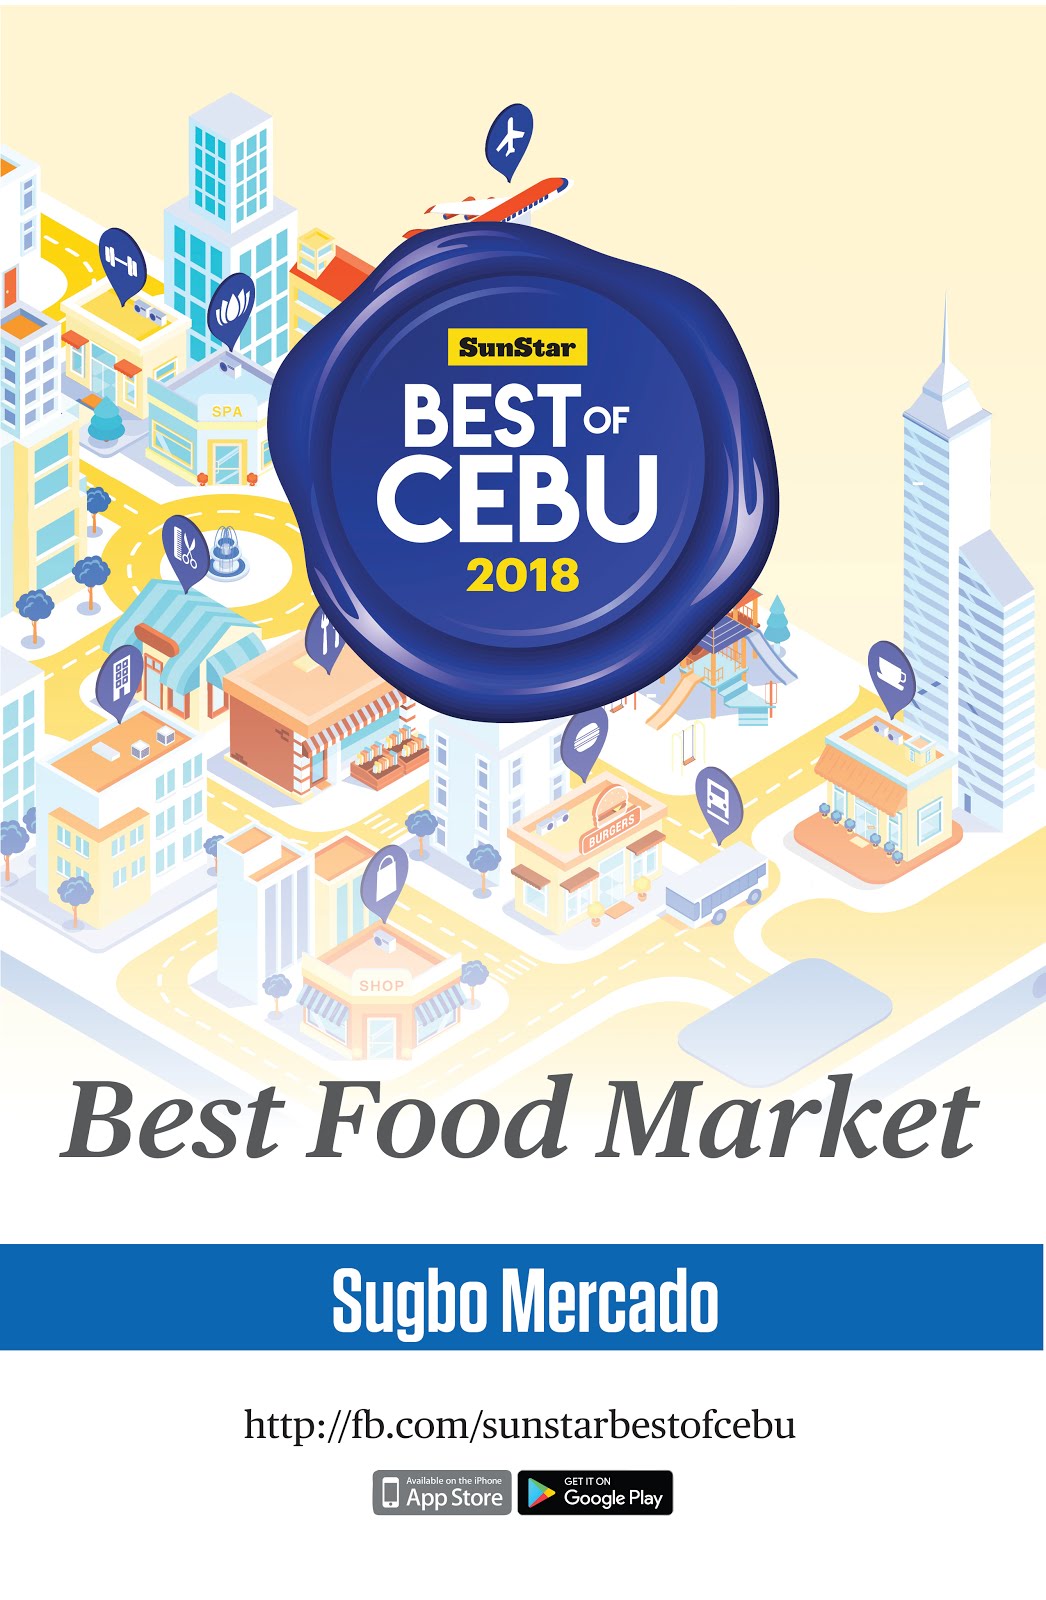 Best of Cebu